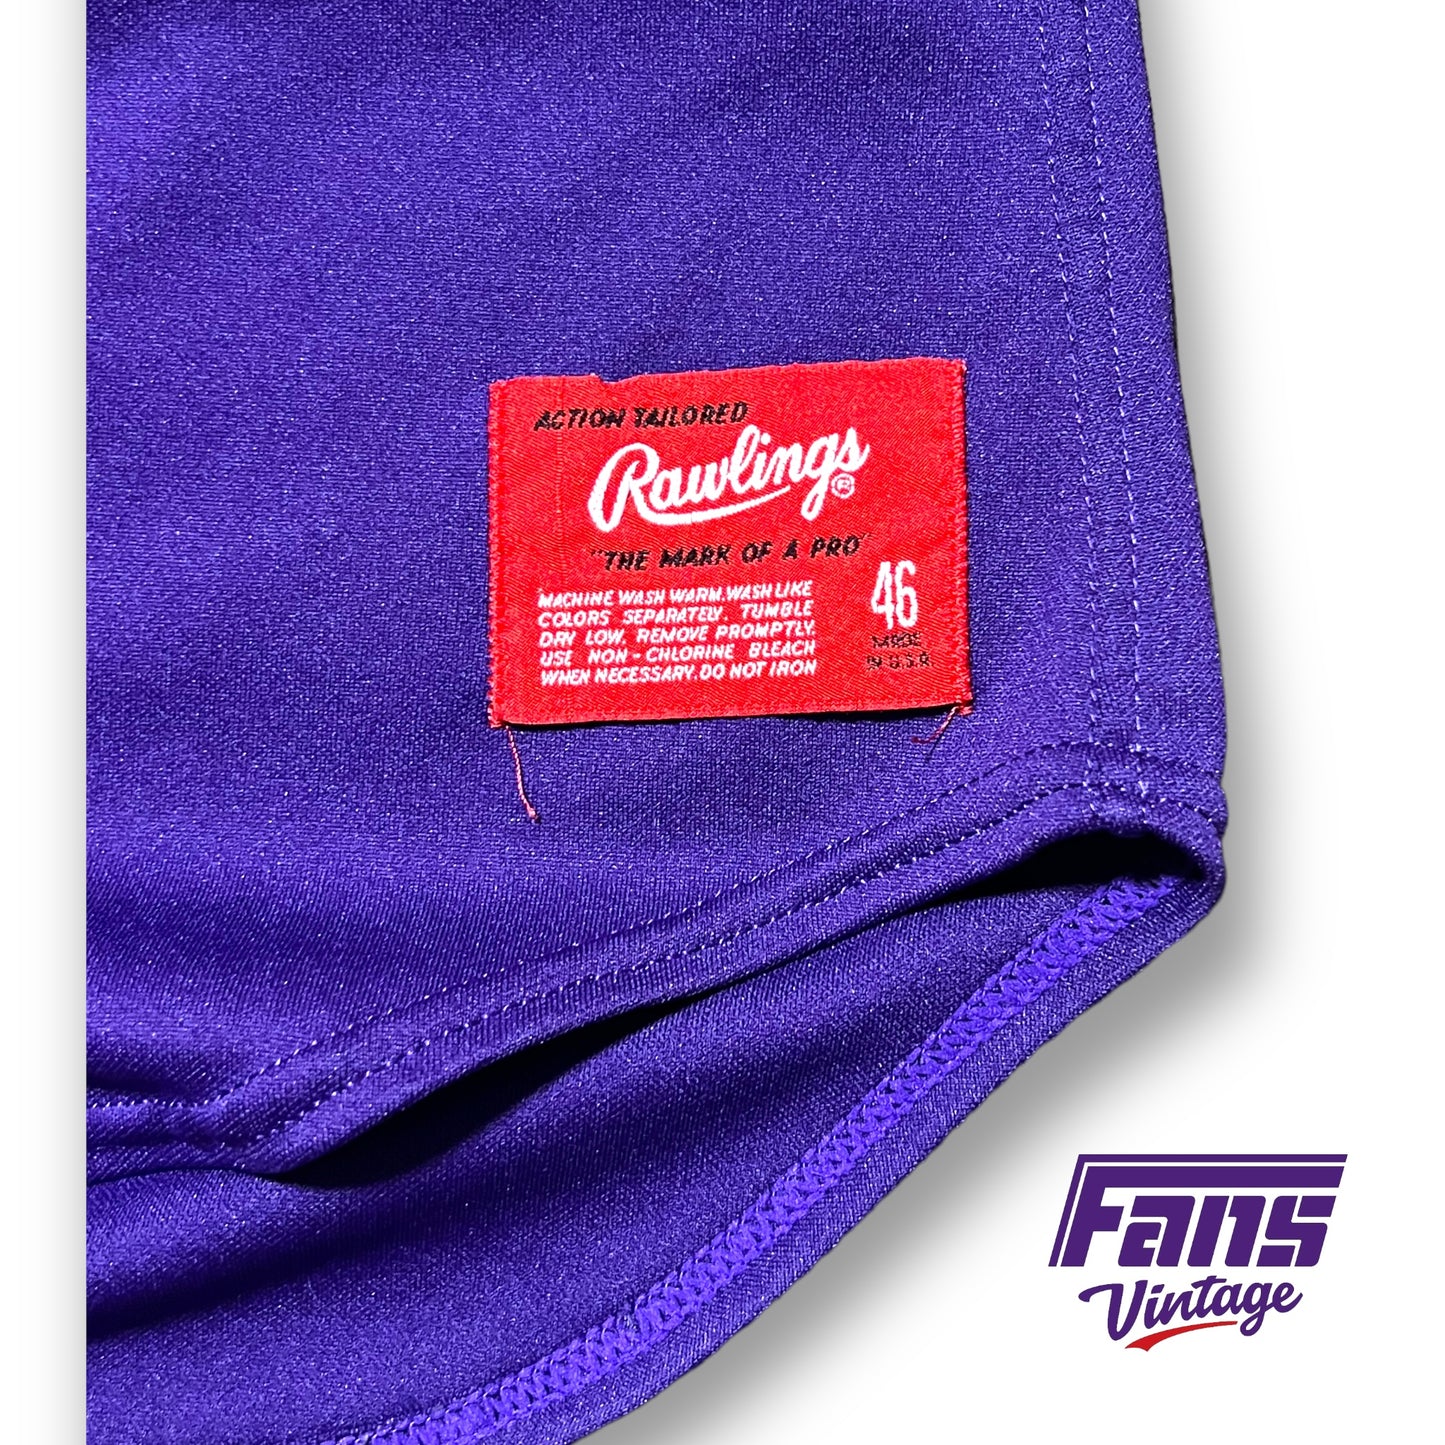 GRAIL - Vintage TCU Baseball Jersey - Rare Game Worn 1994 Purple “Ball Player” Horned Frog Logo Edition